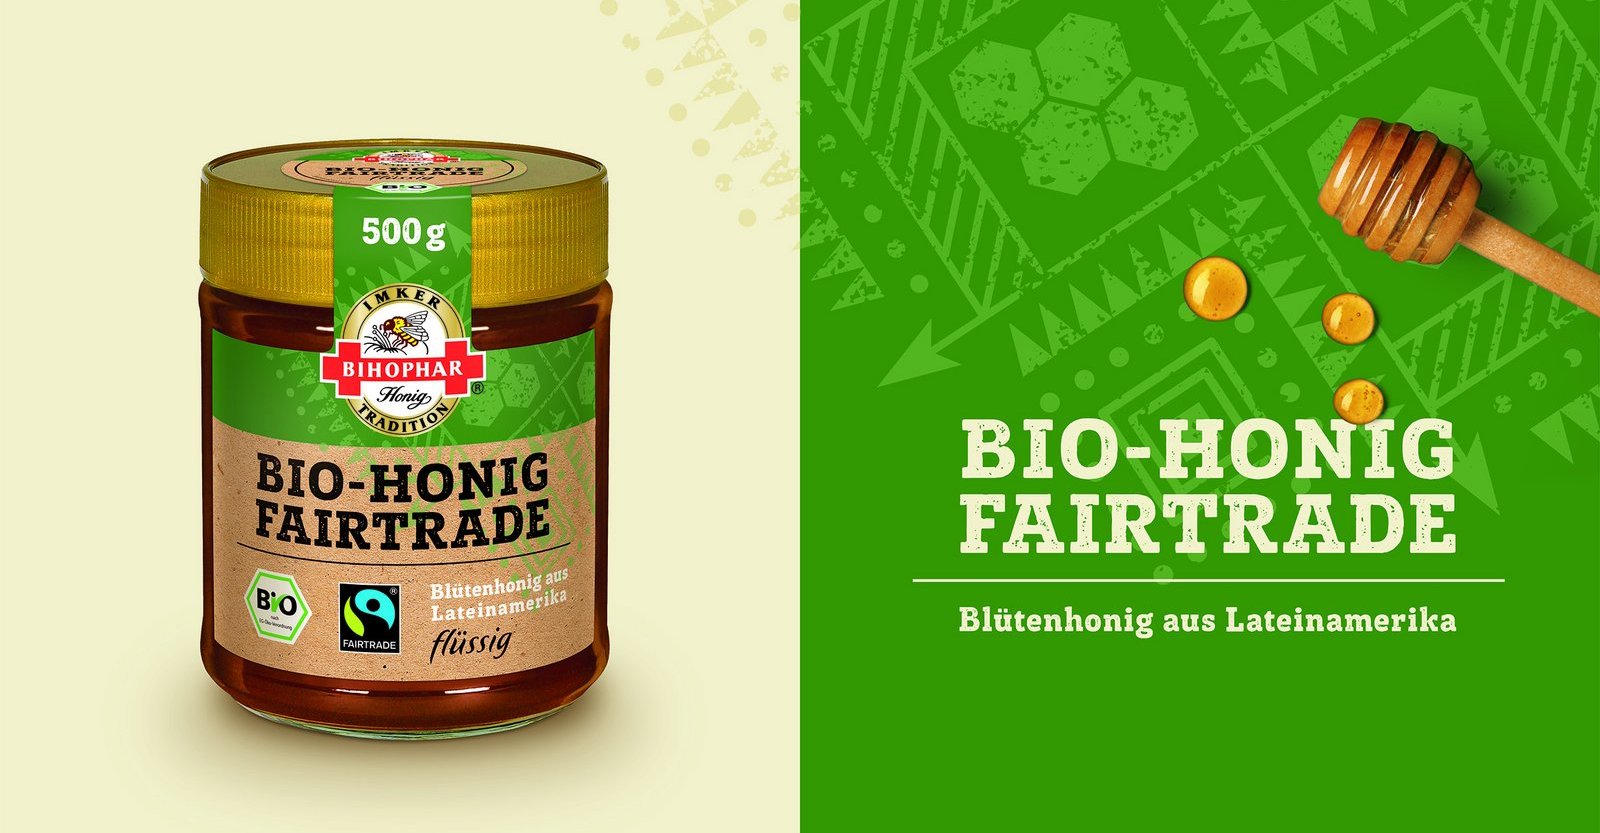 Bihophar Bio Honig Relaunch Grafikdesign Branding-Strategie Verpackungsdesign Logodesign Line Extension